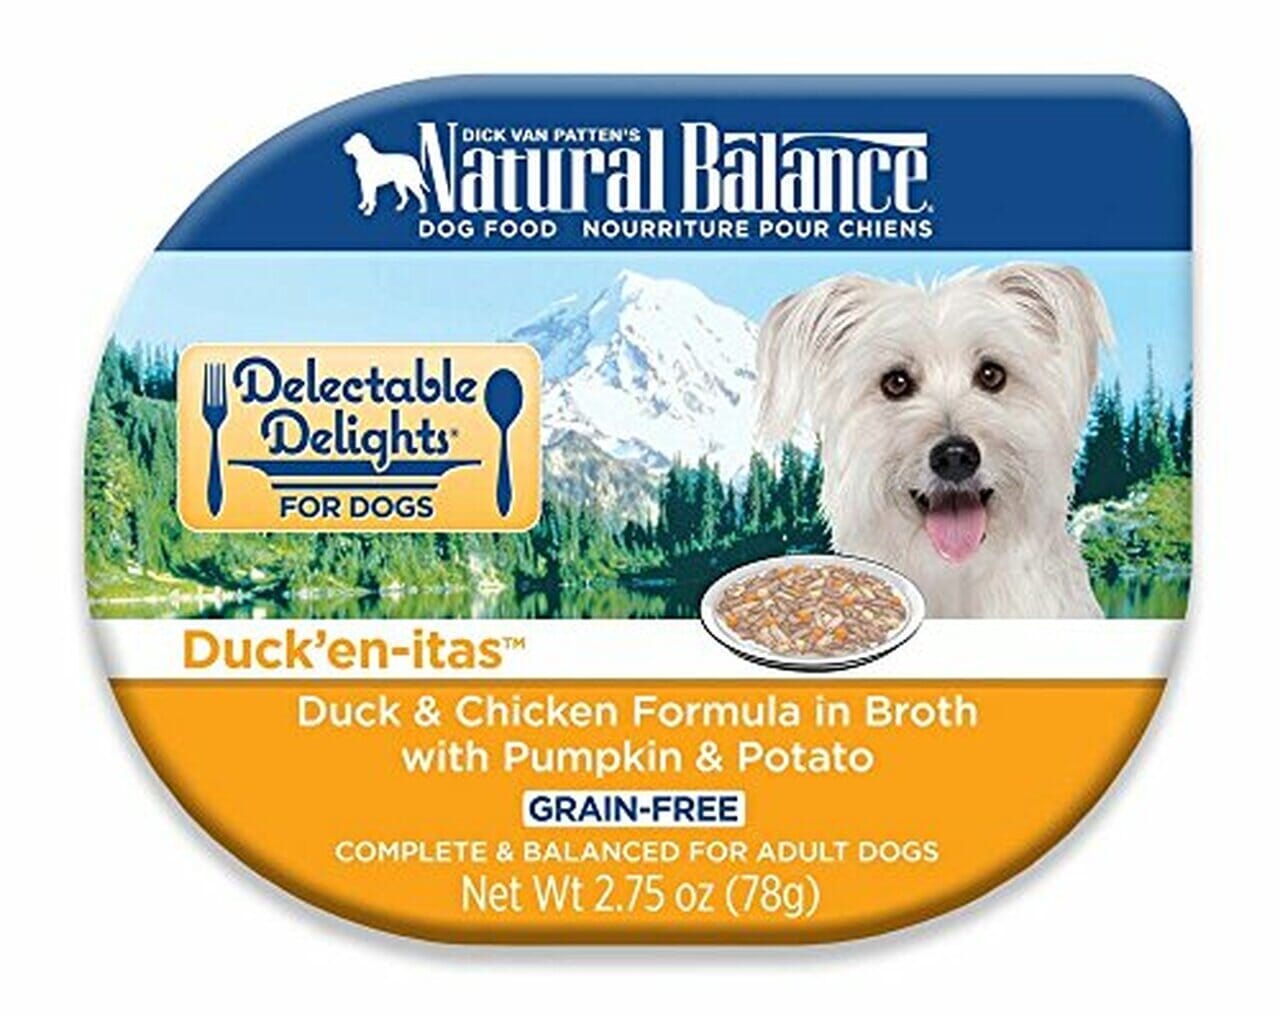 Natural Balance Pet Foods Delectable Delights Wet Dog Food Duck'en-itas in Broth - 2.75 Oz - Case of 24  